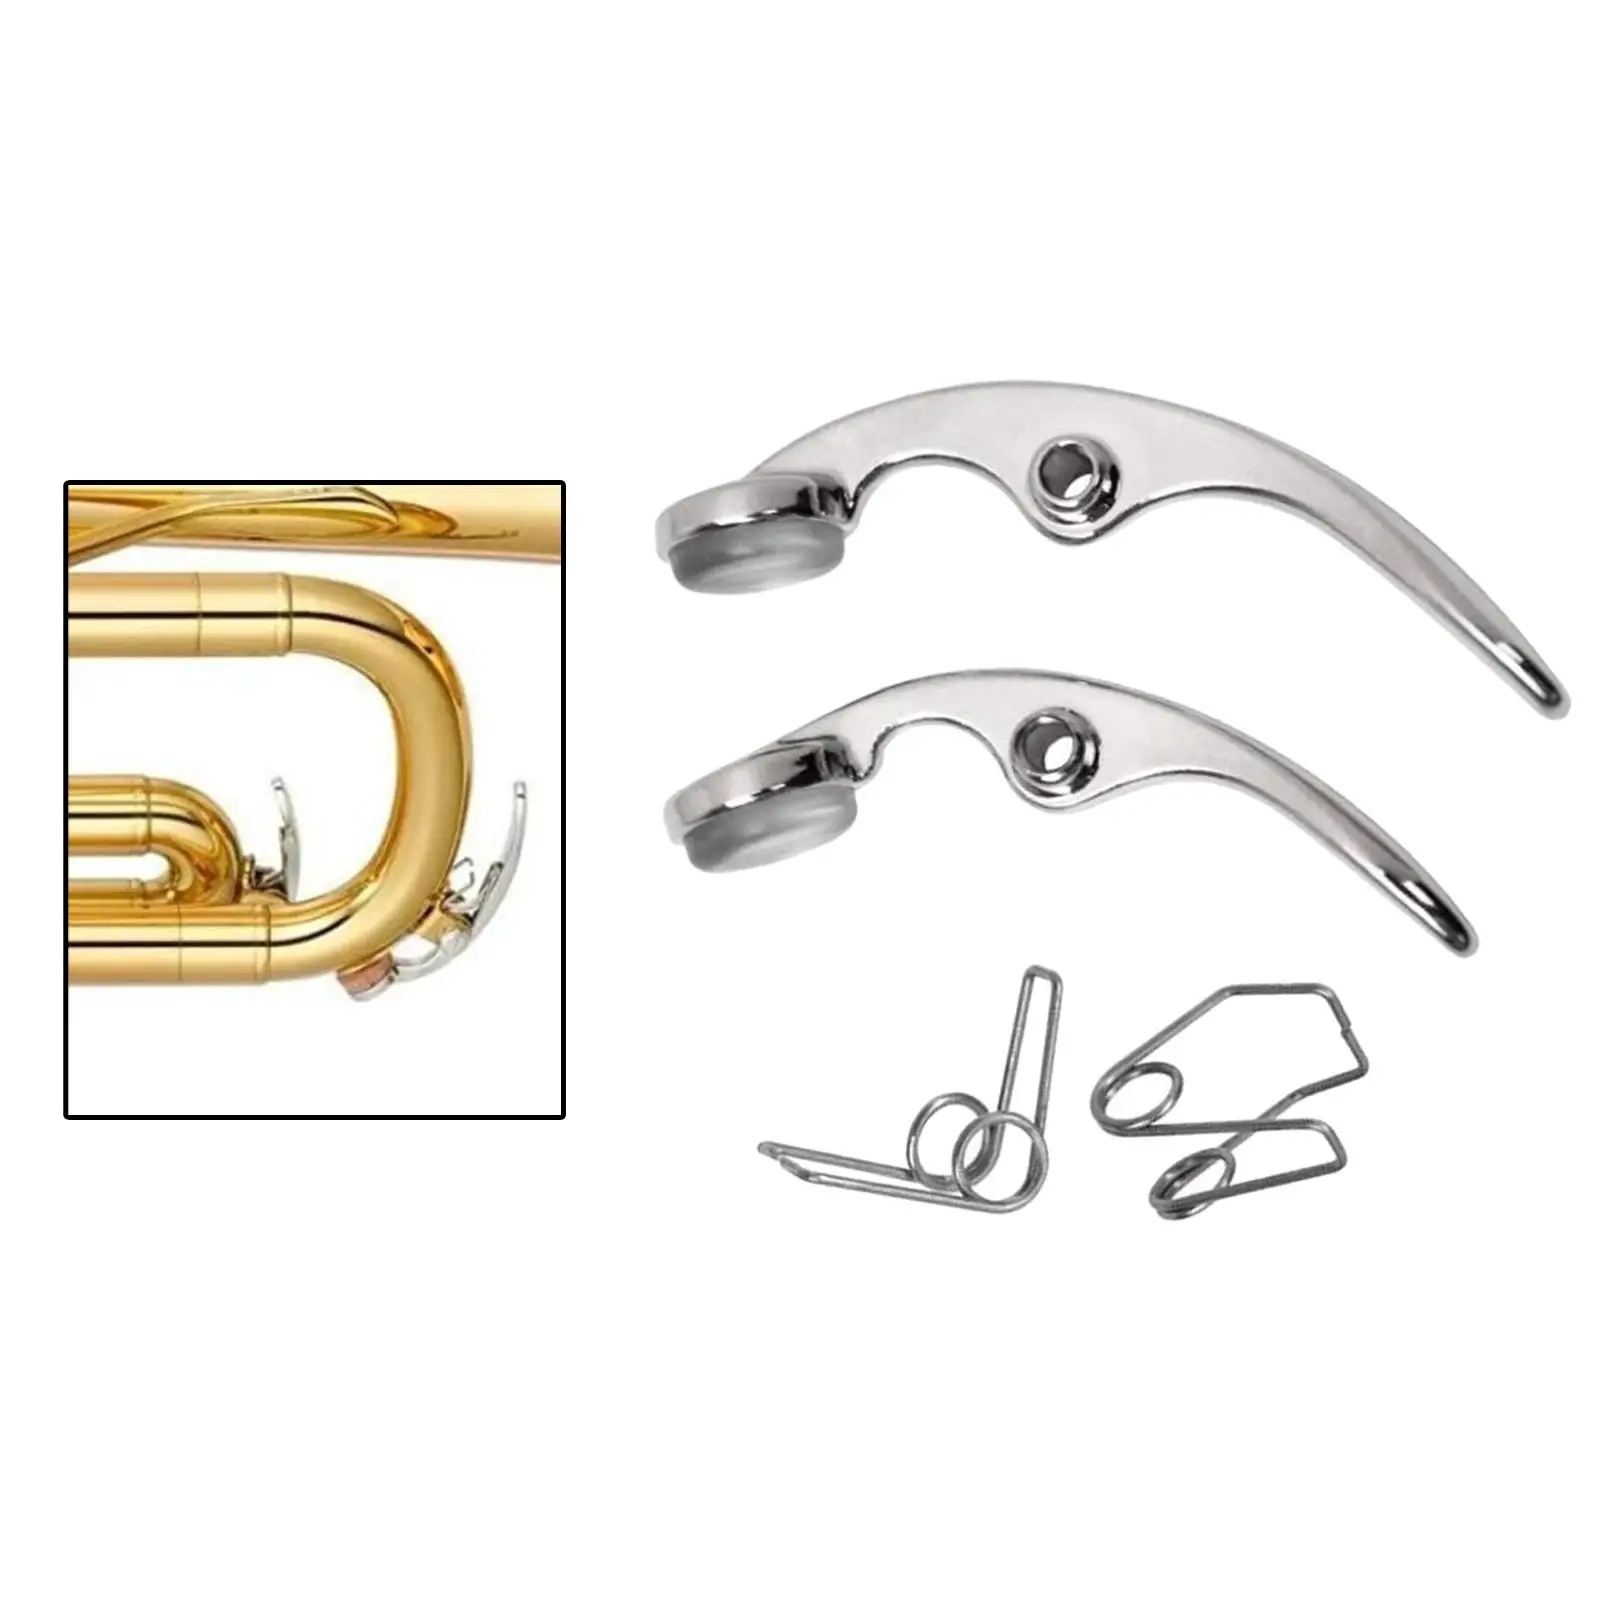 Trumpet Water Key Accessories Drain Valve Key for Repairing Trumpet Trombone